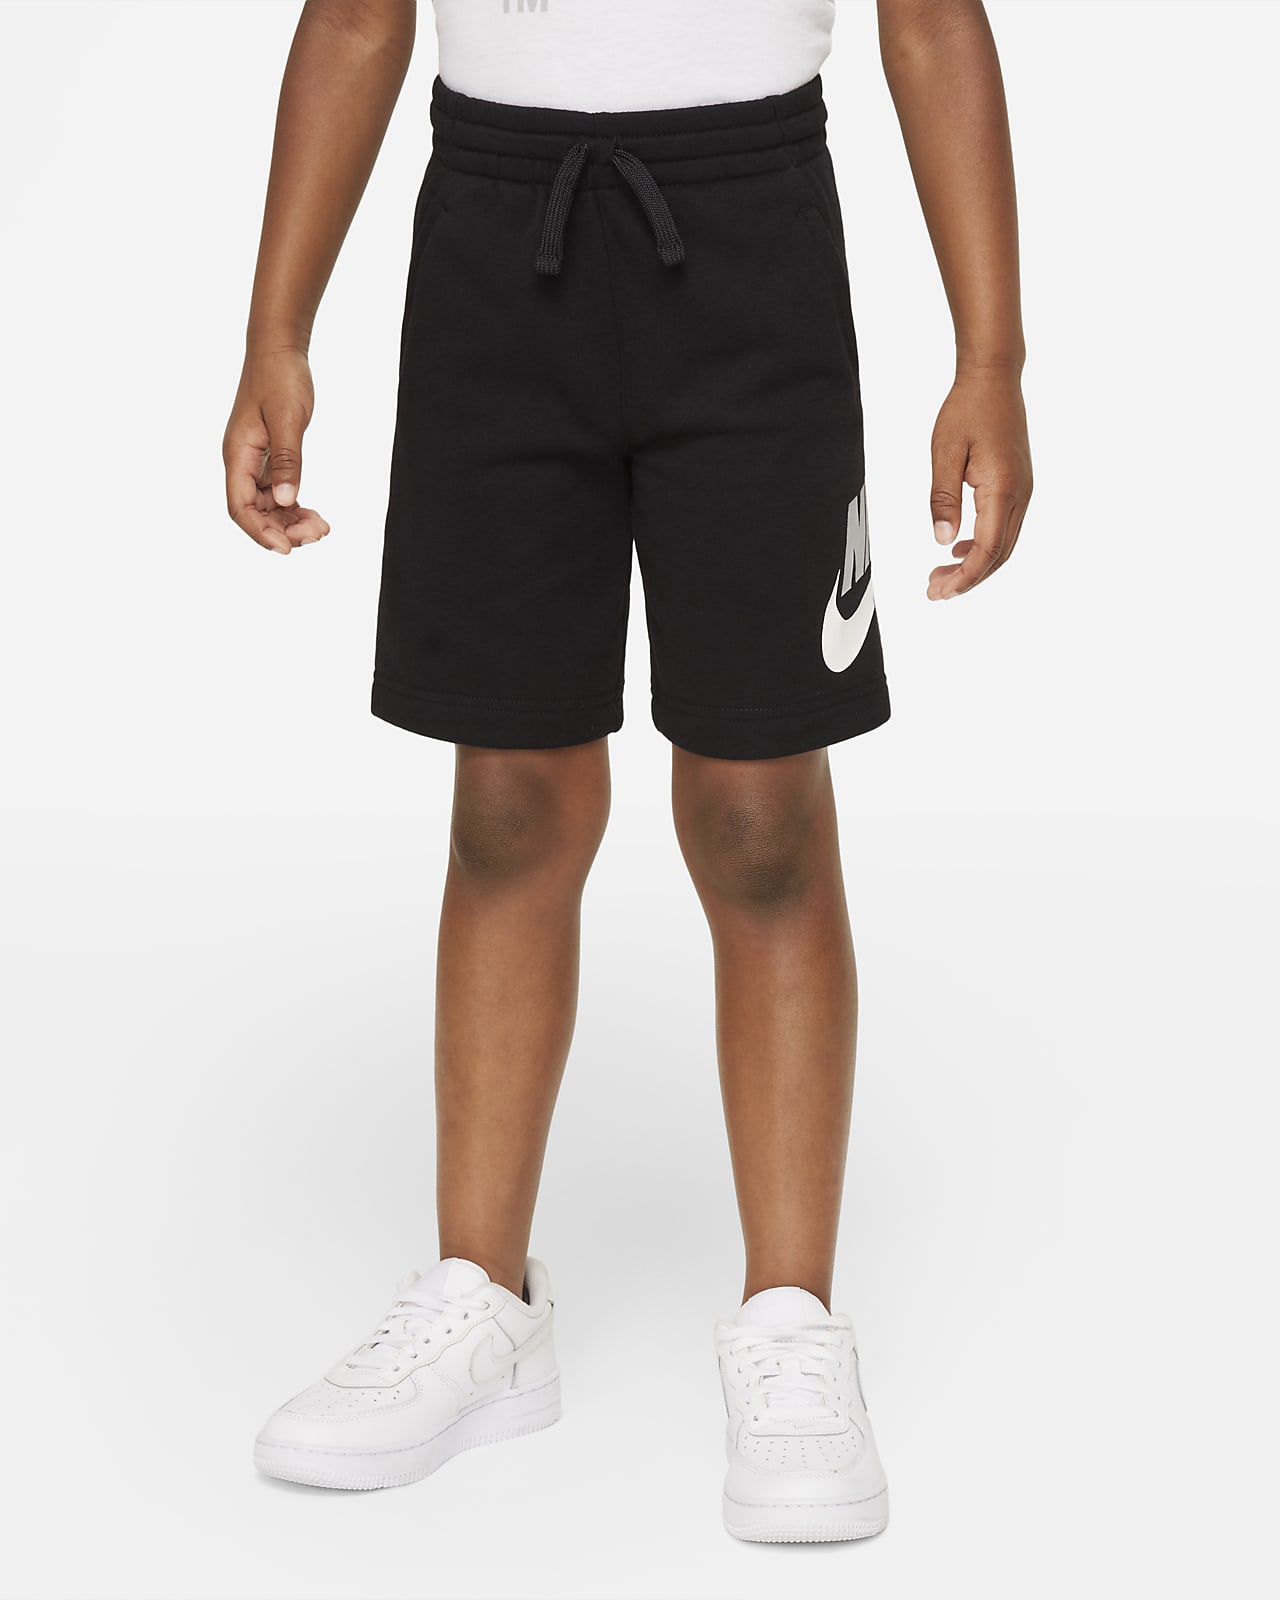 Nike Little Kids' Shorts